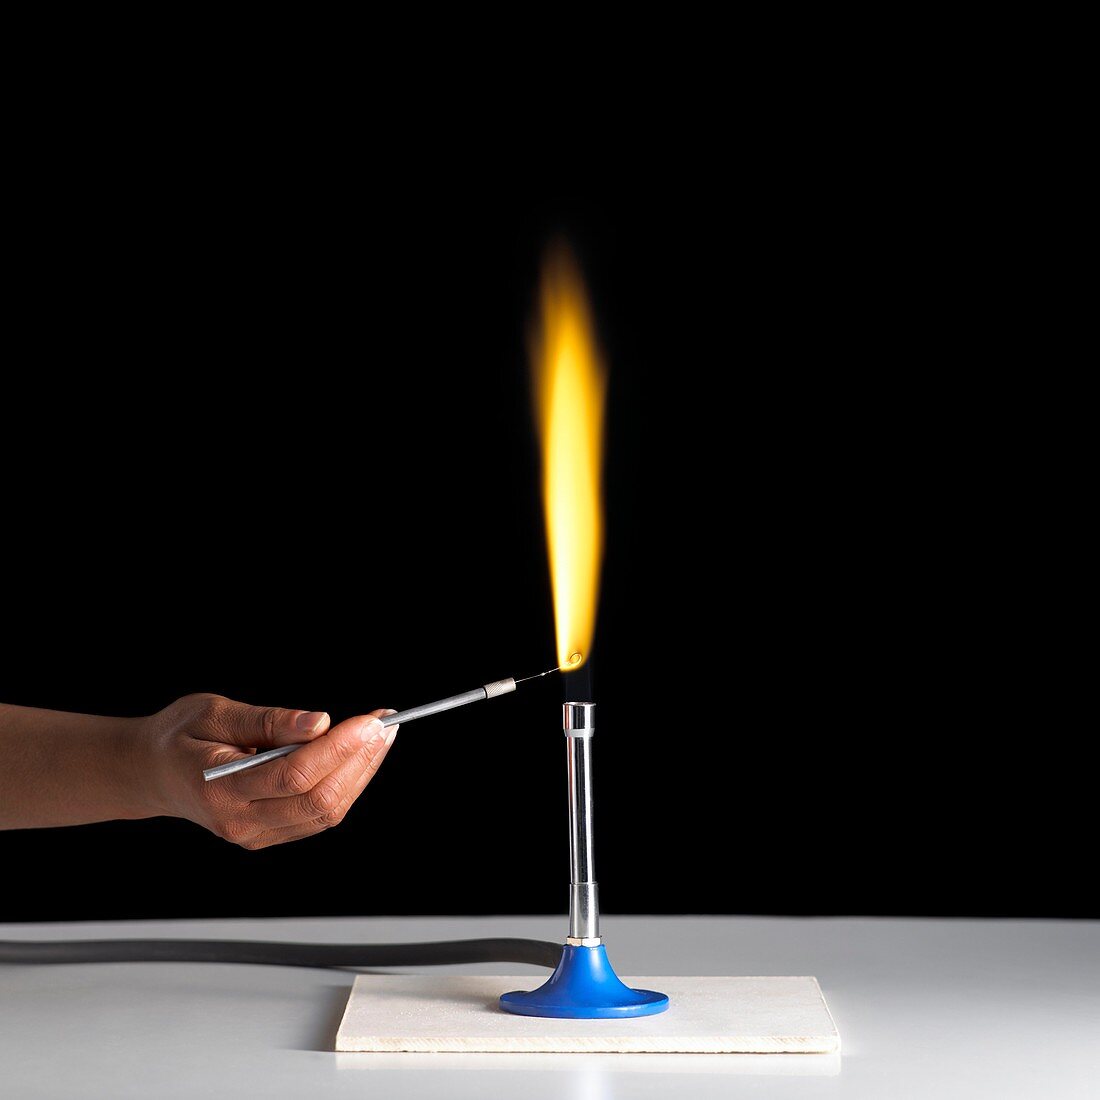 Sodium flame test